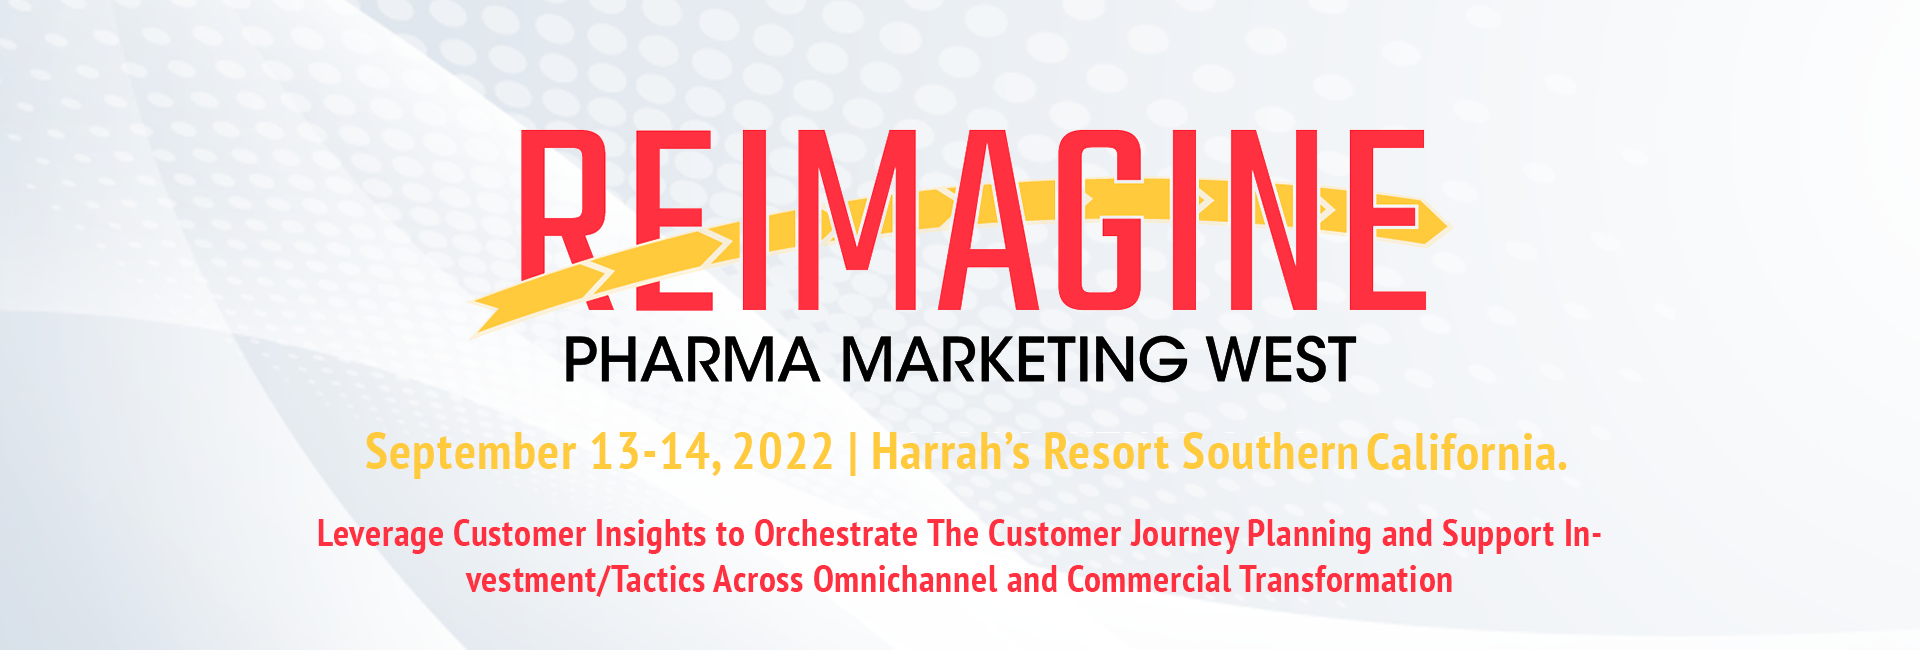 ReImagine Pharma Marketing West